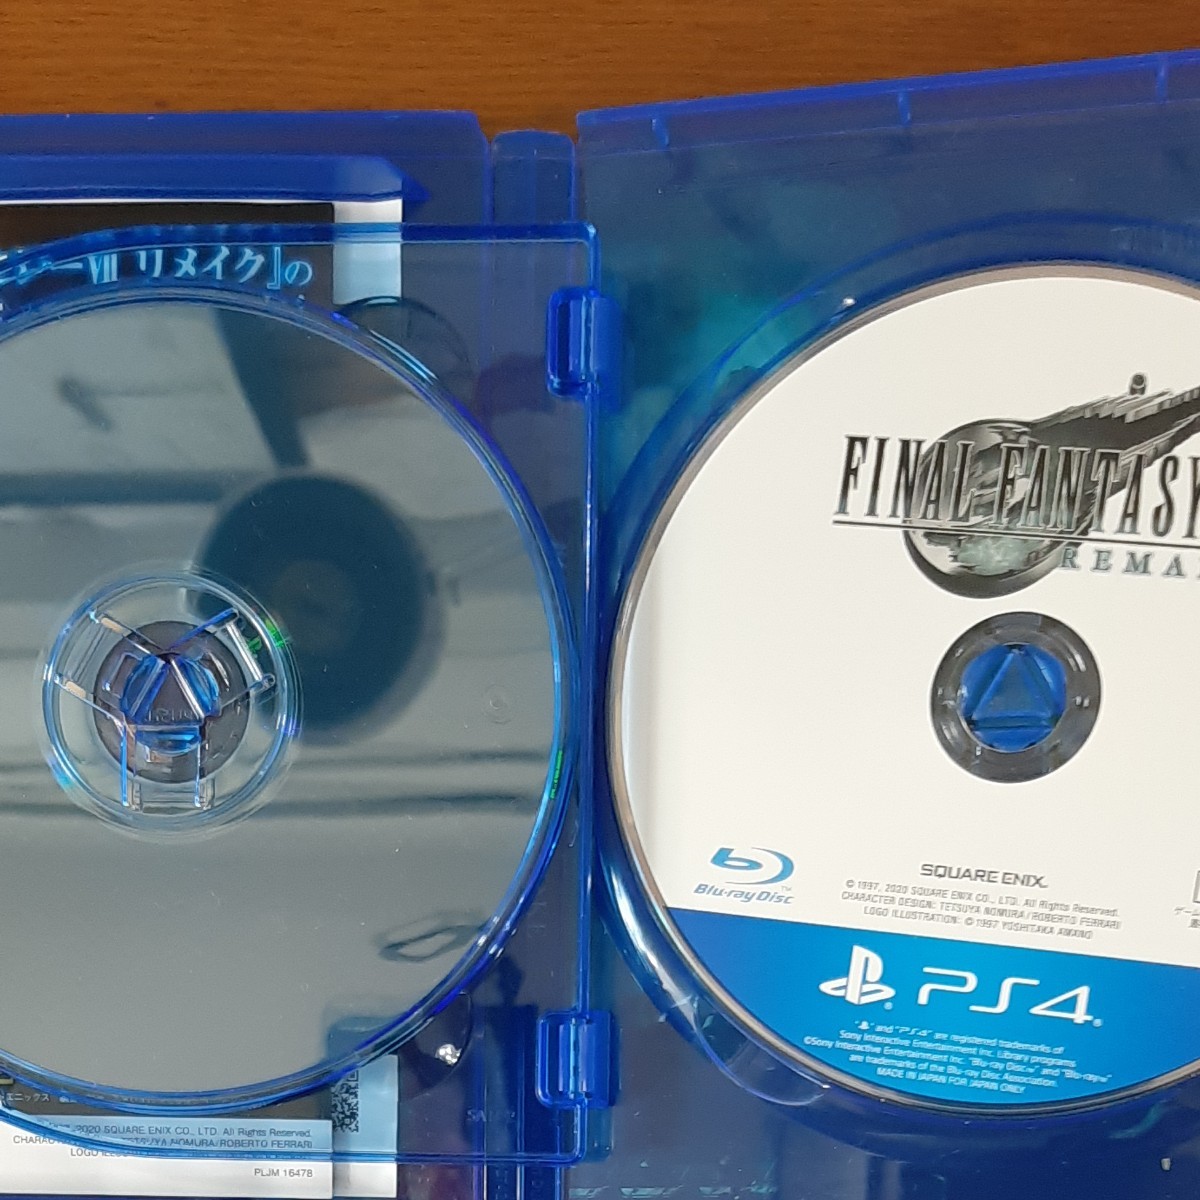 【PS4】 ファイナルファンタジーVII REMAKE PS4 PlayStation4